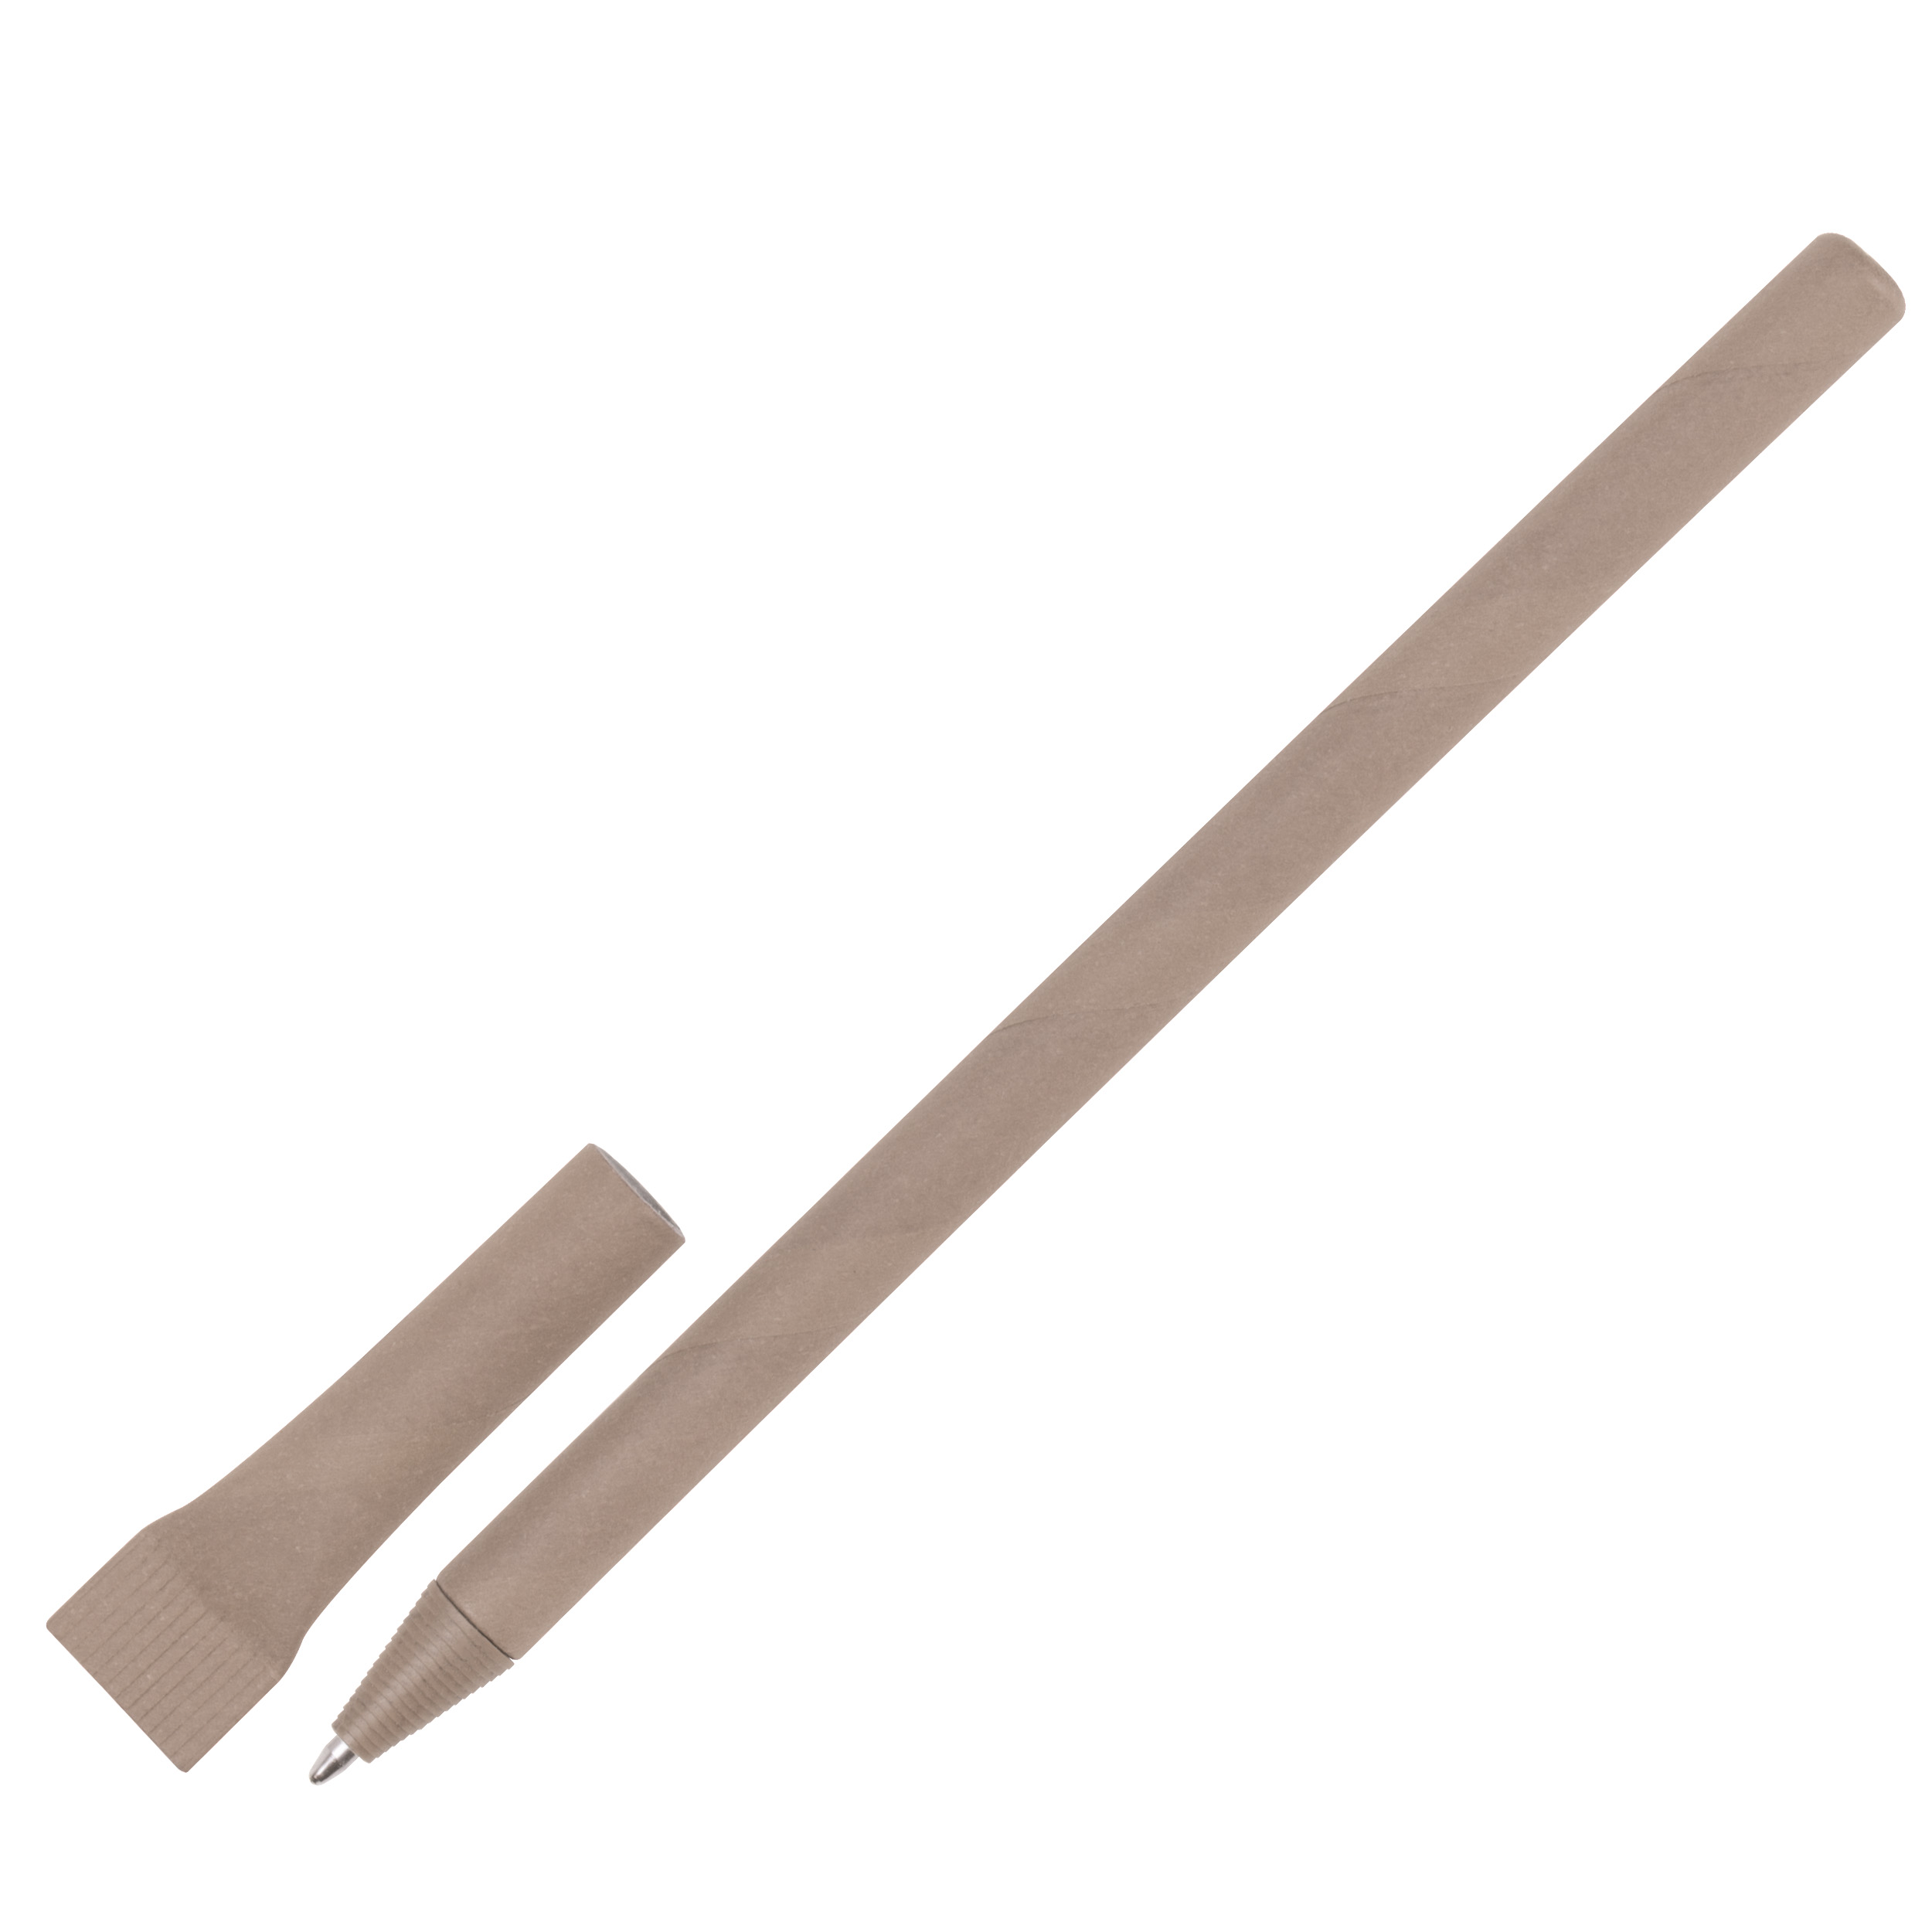 Carboard pen